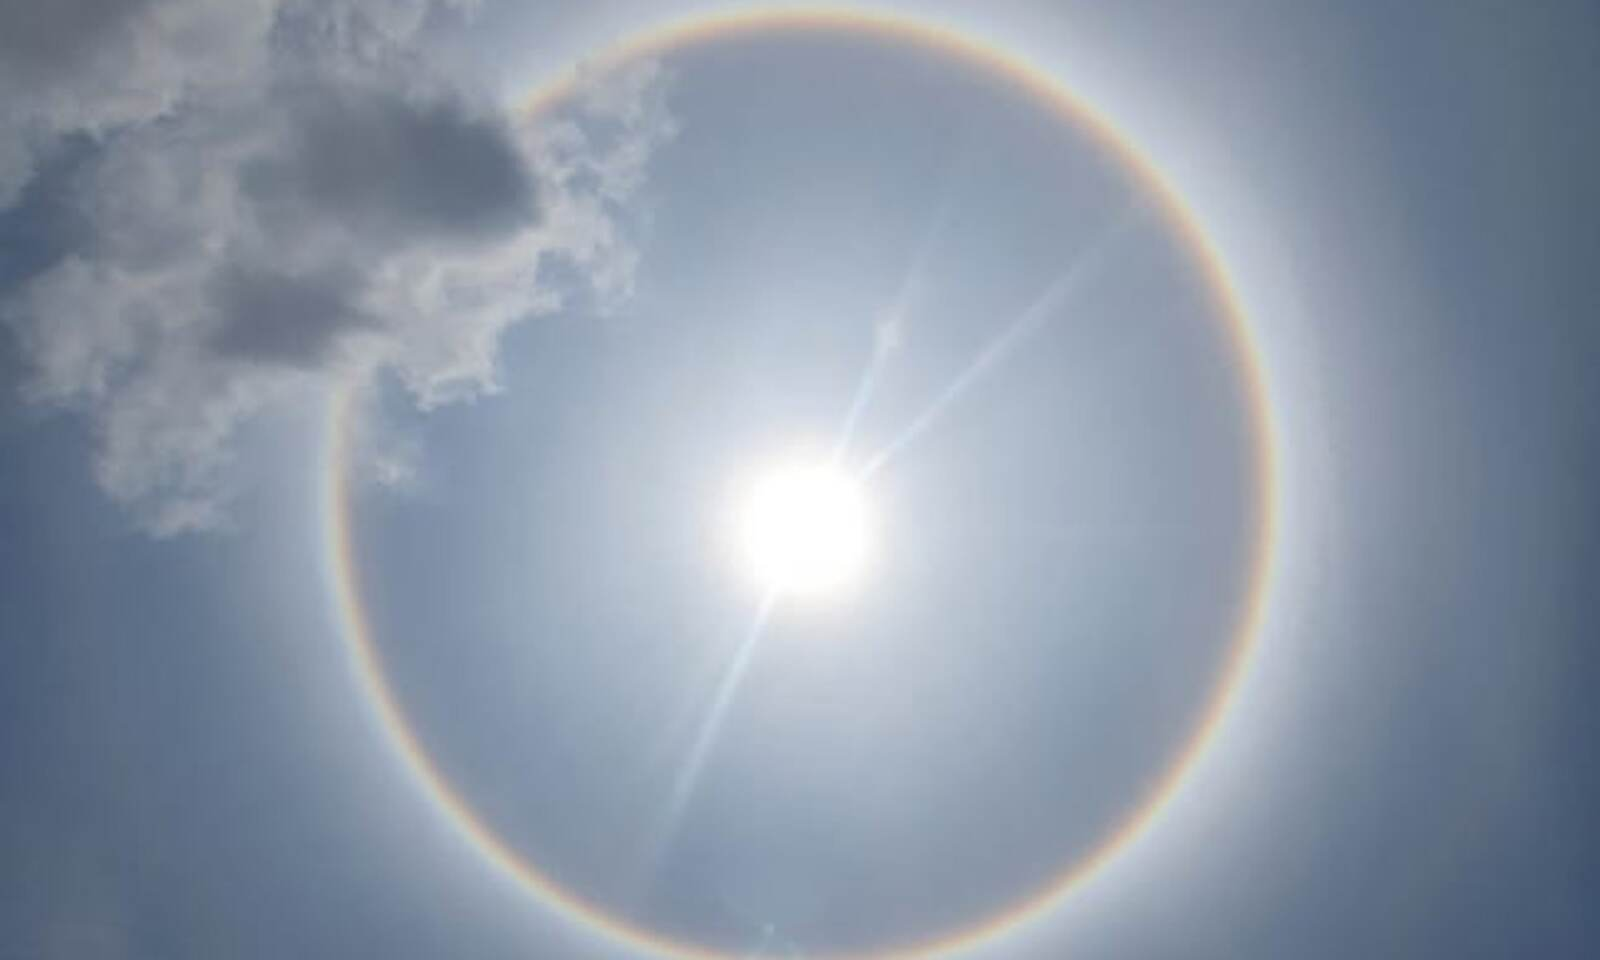 Rare Sun Halo Sighted In Dehradun pic goes viral